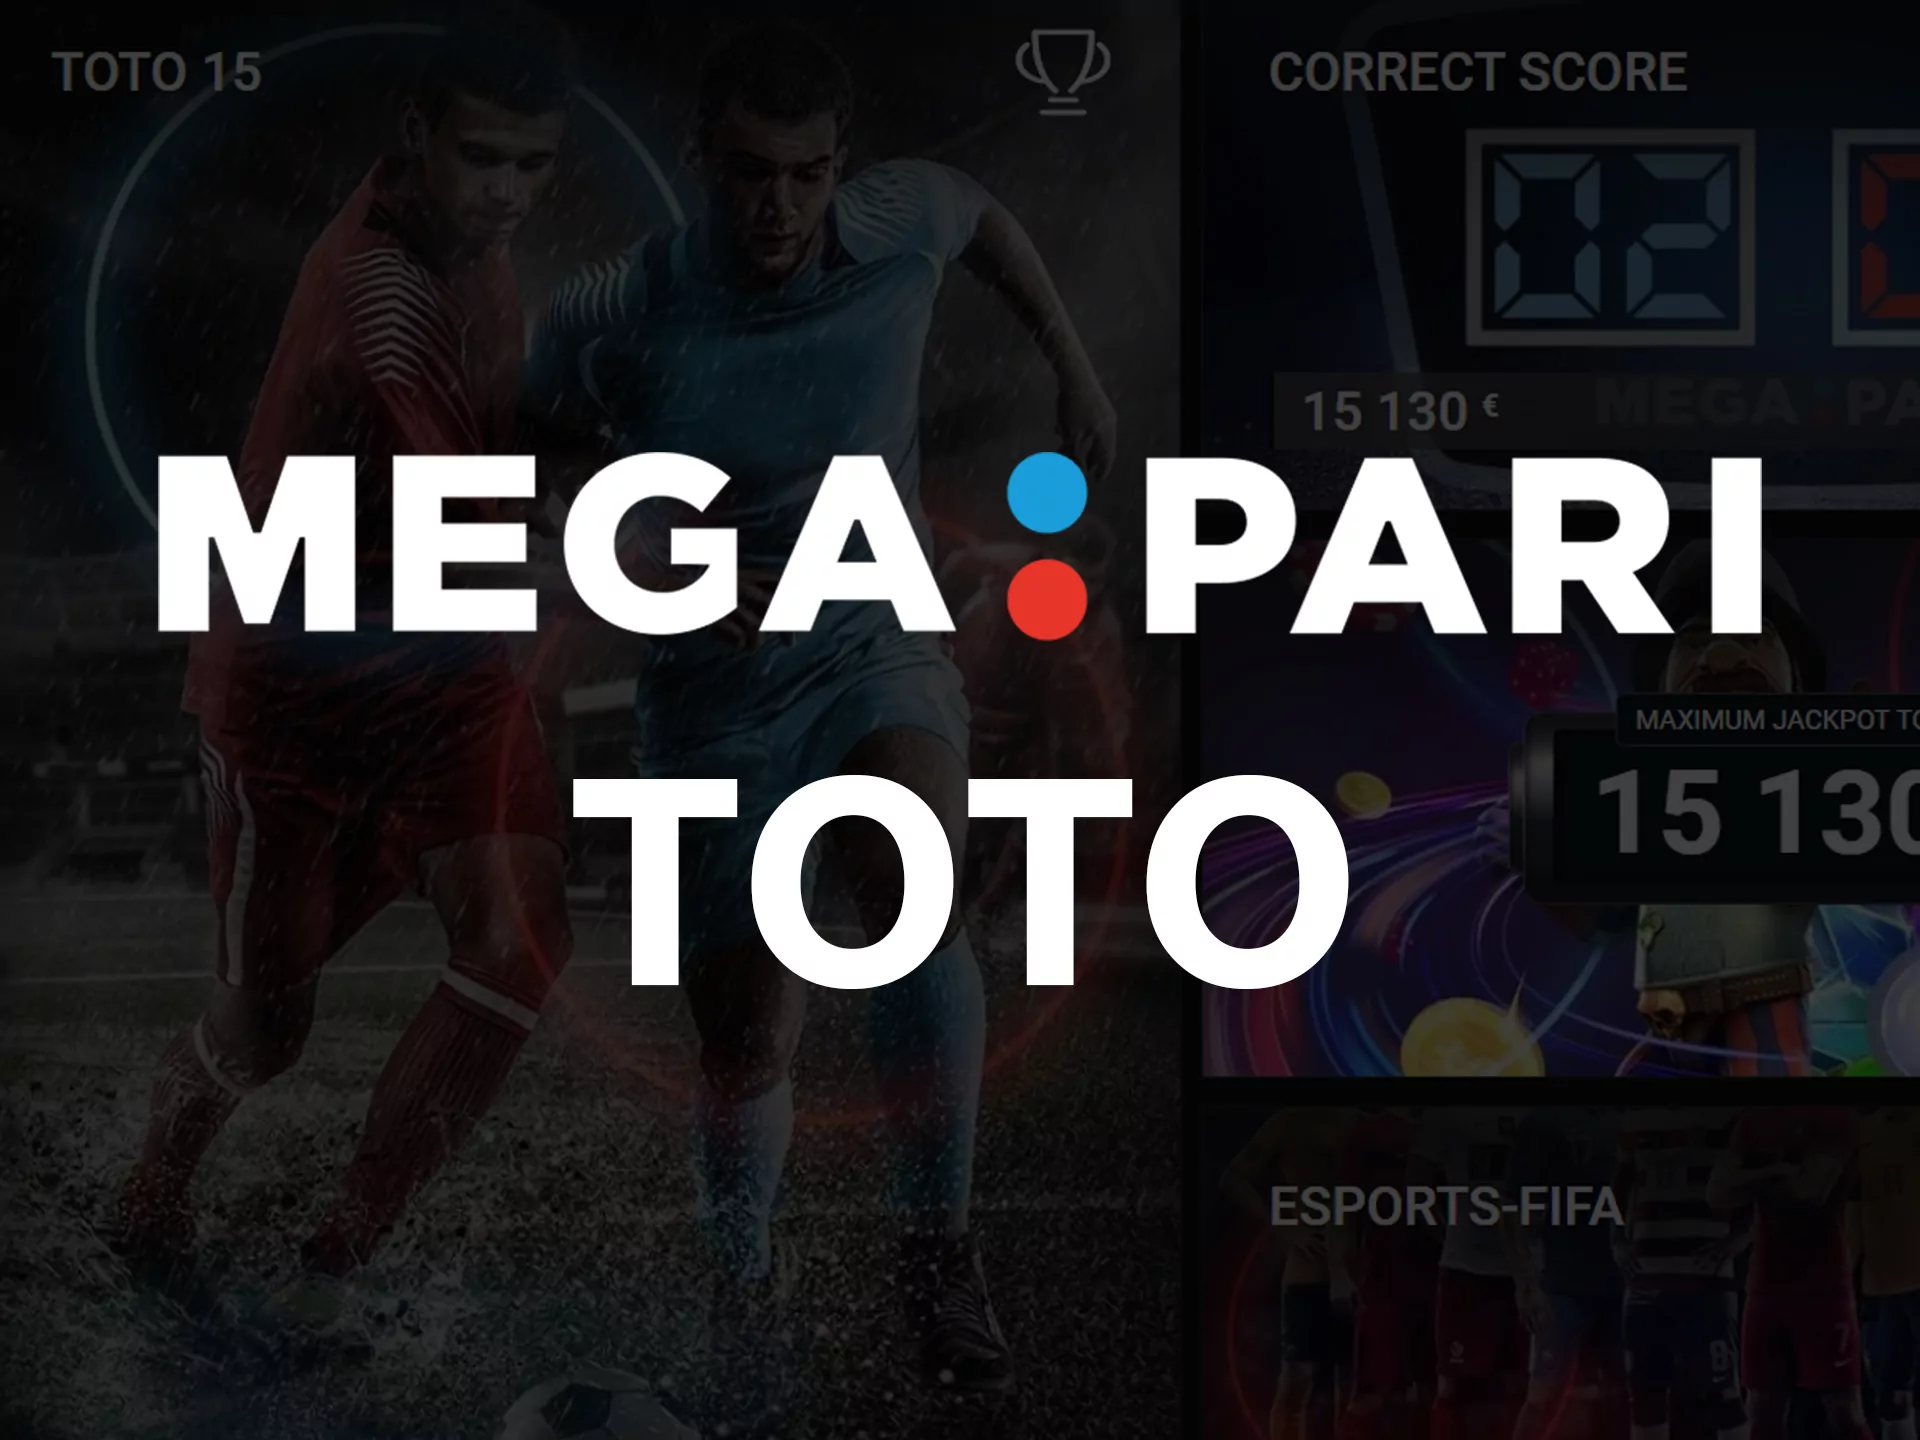 Mega Pari offers several types of TOTO games.